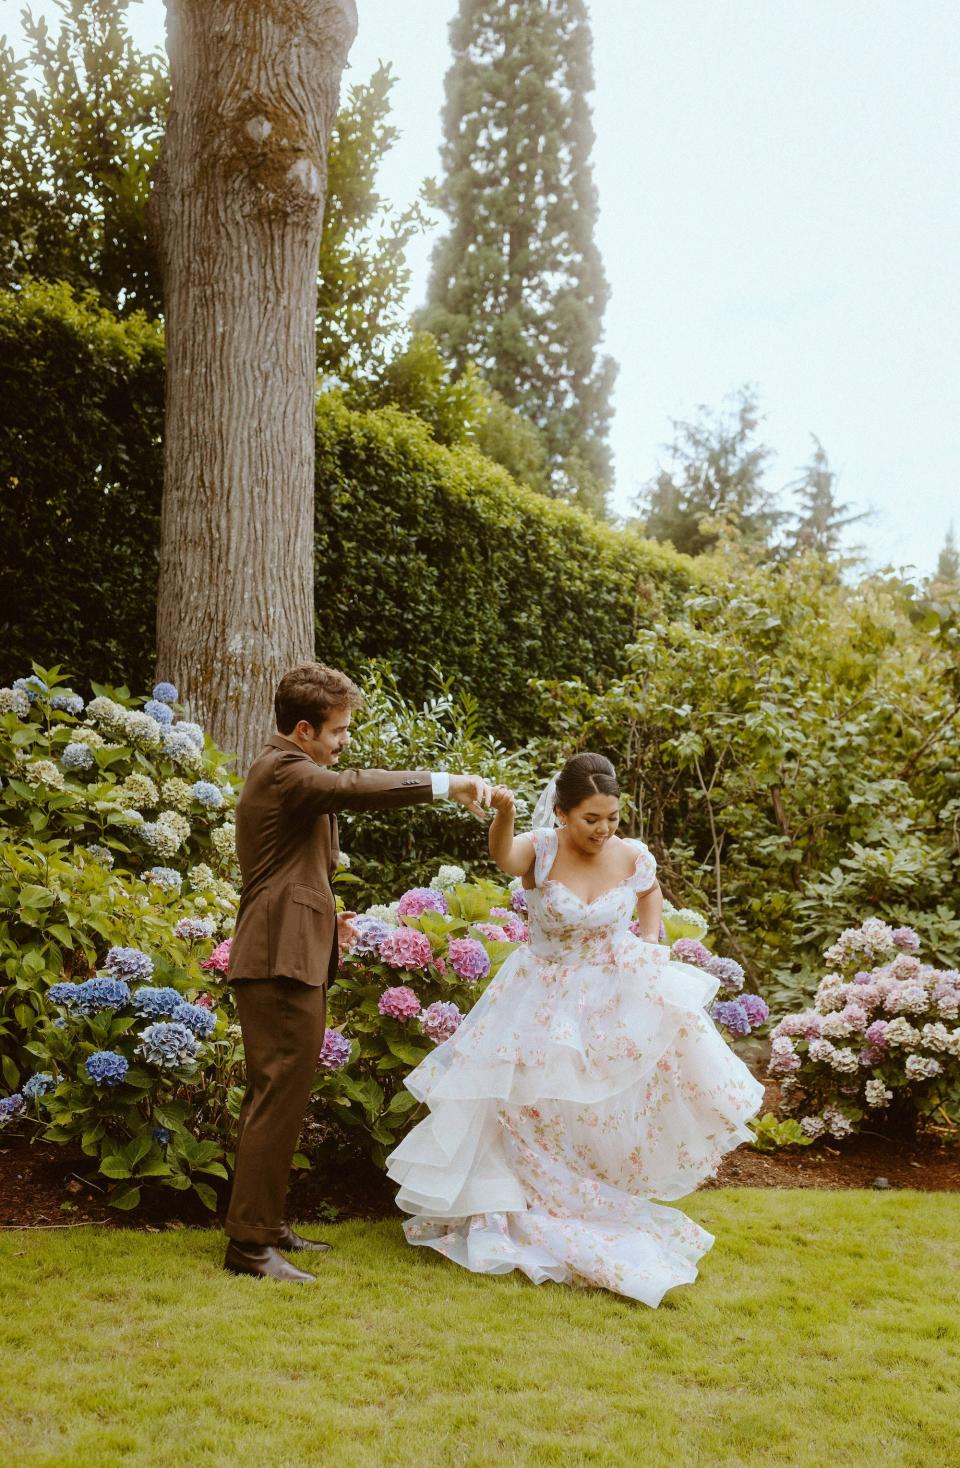 A groom spins a bride in a garden.